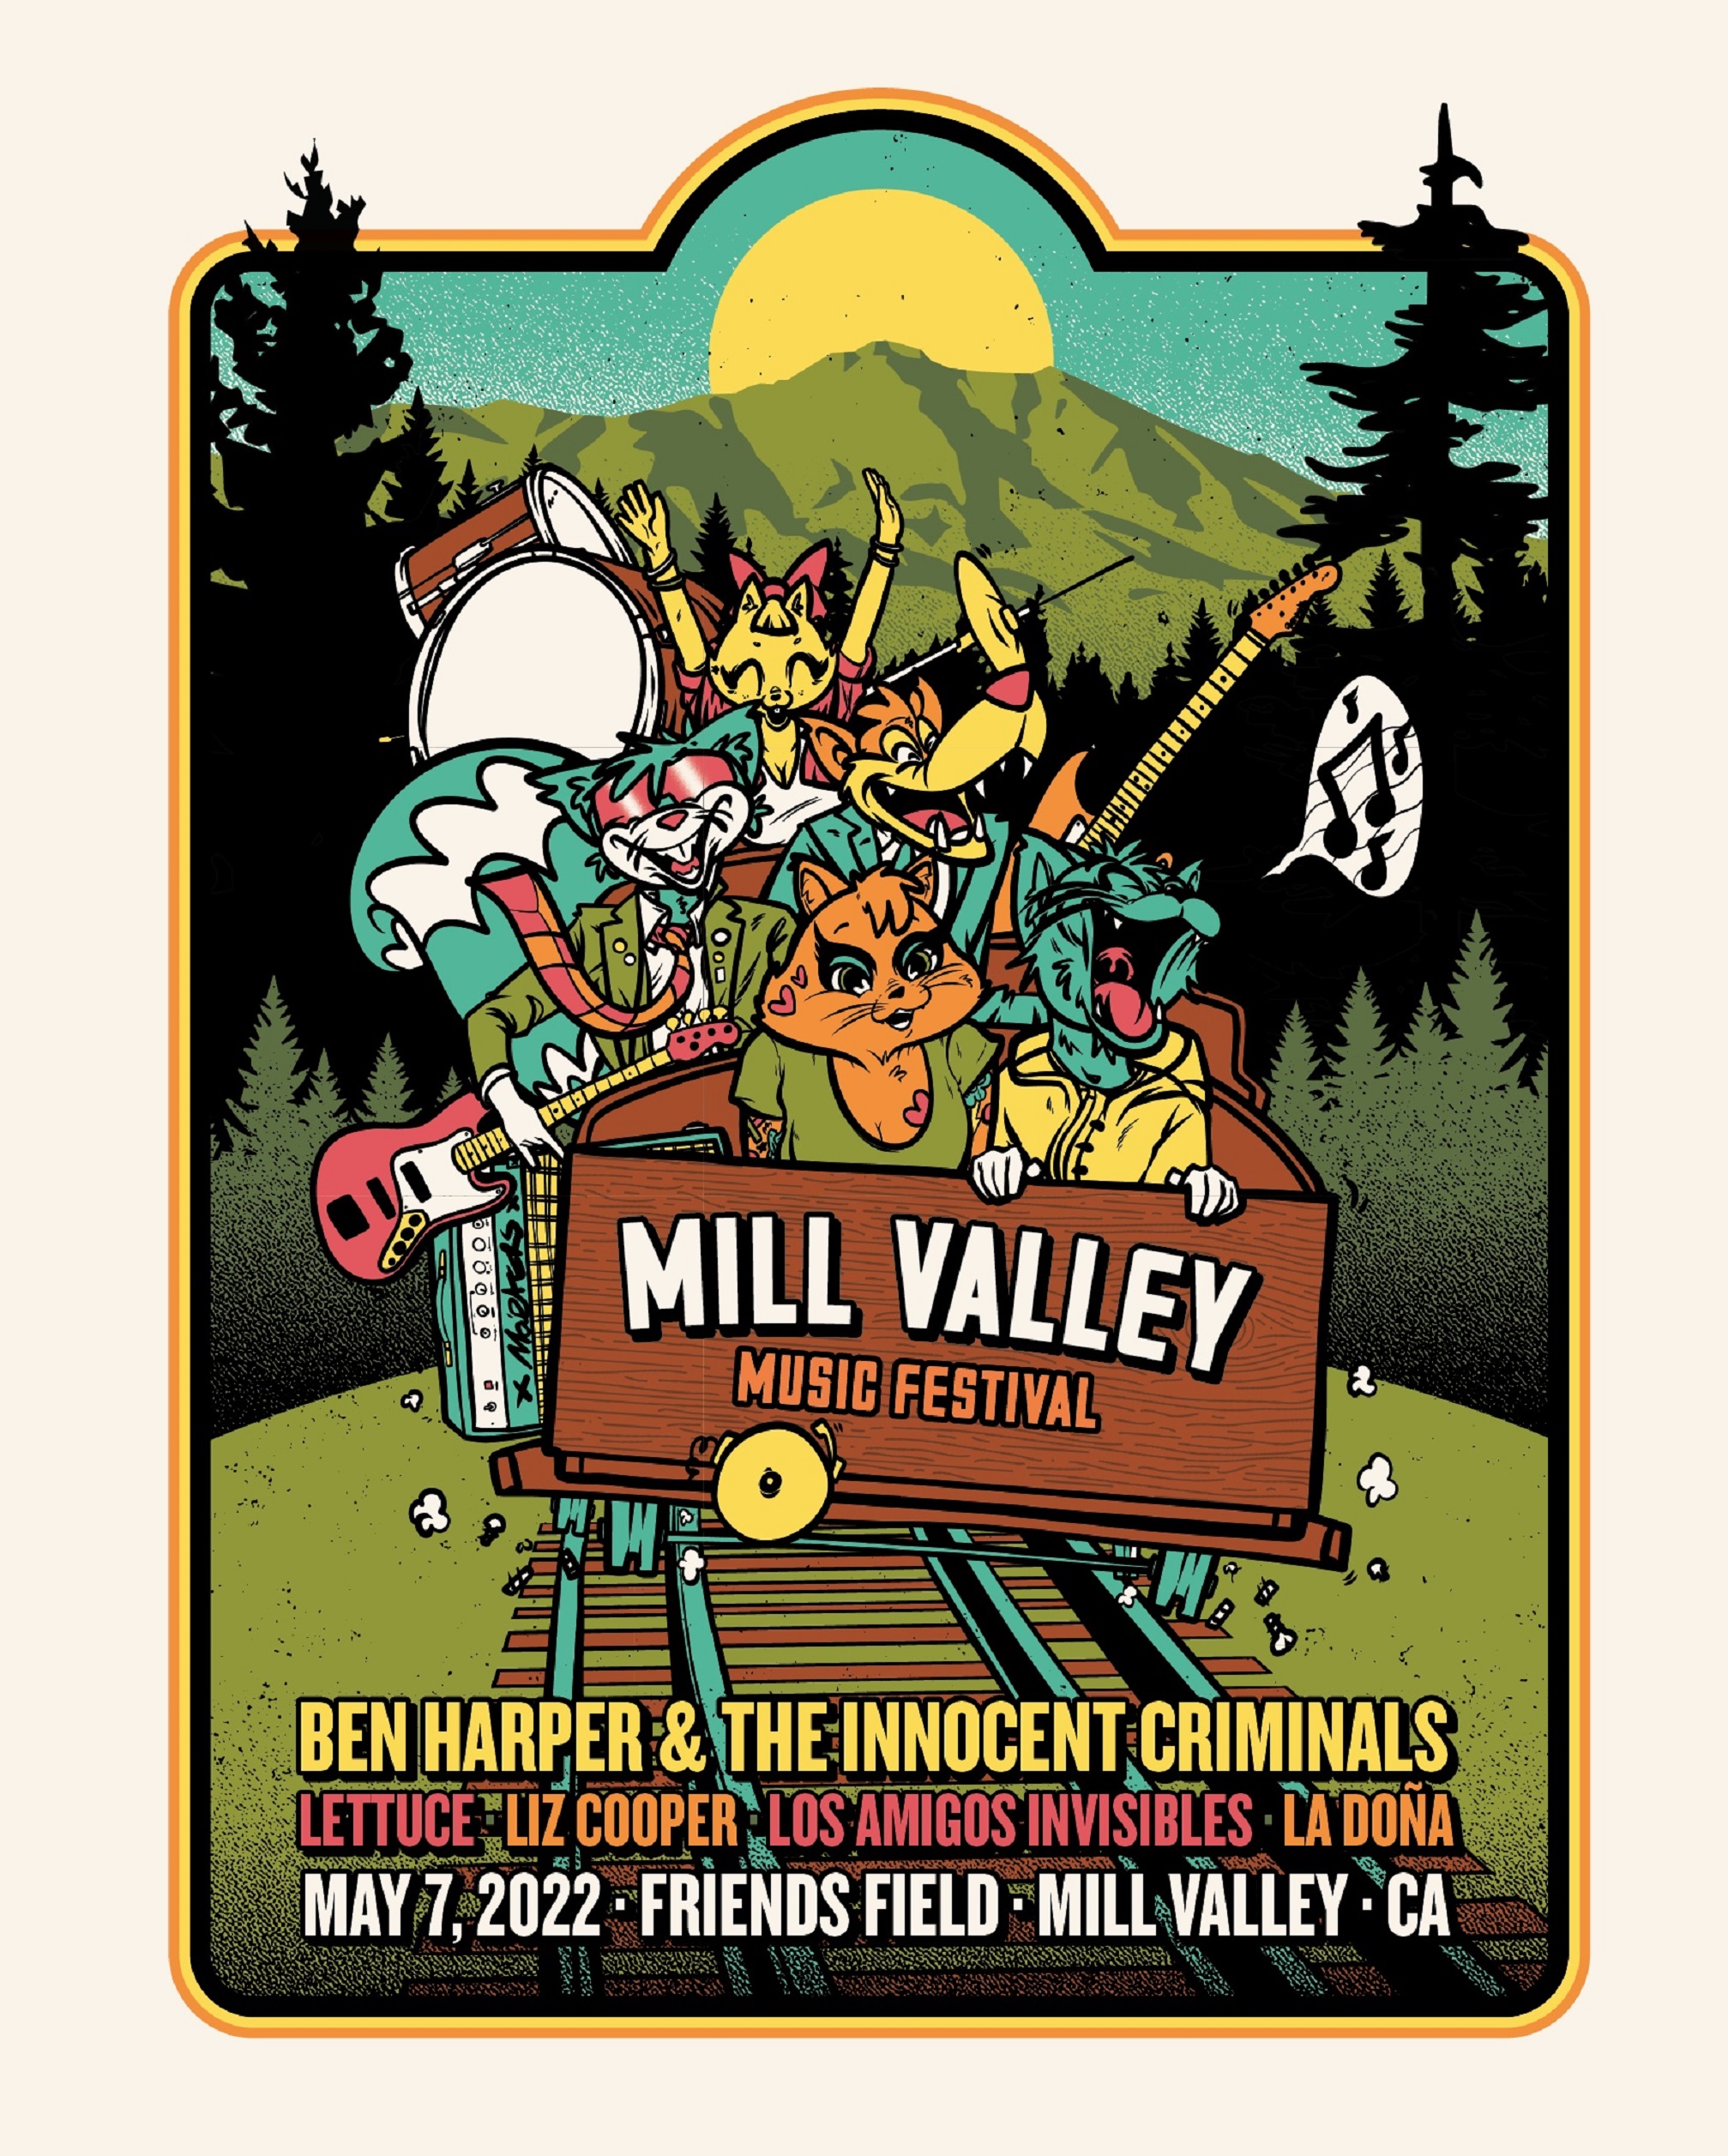 Mill Valley Music Festival Kicks Off May 7 Feat. Ben Harper, Lettuce, Liz Cooper, La Doña & More